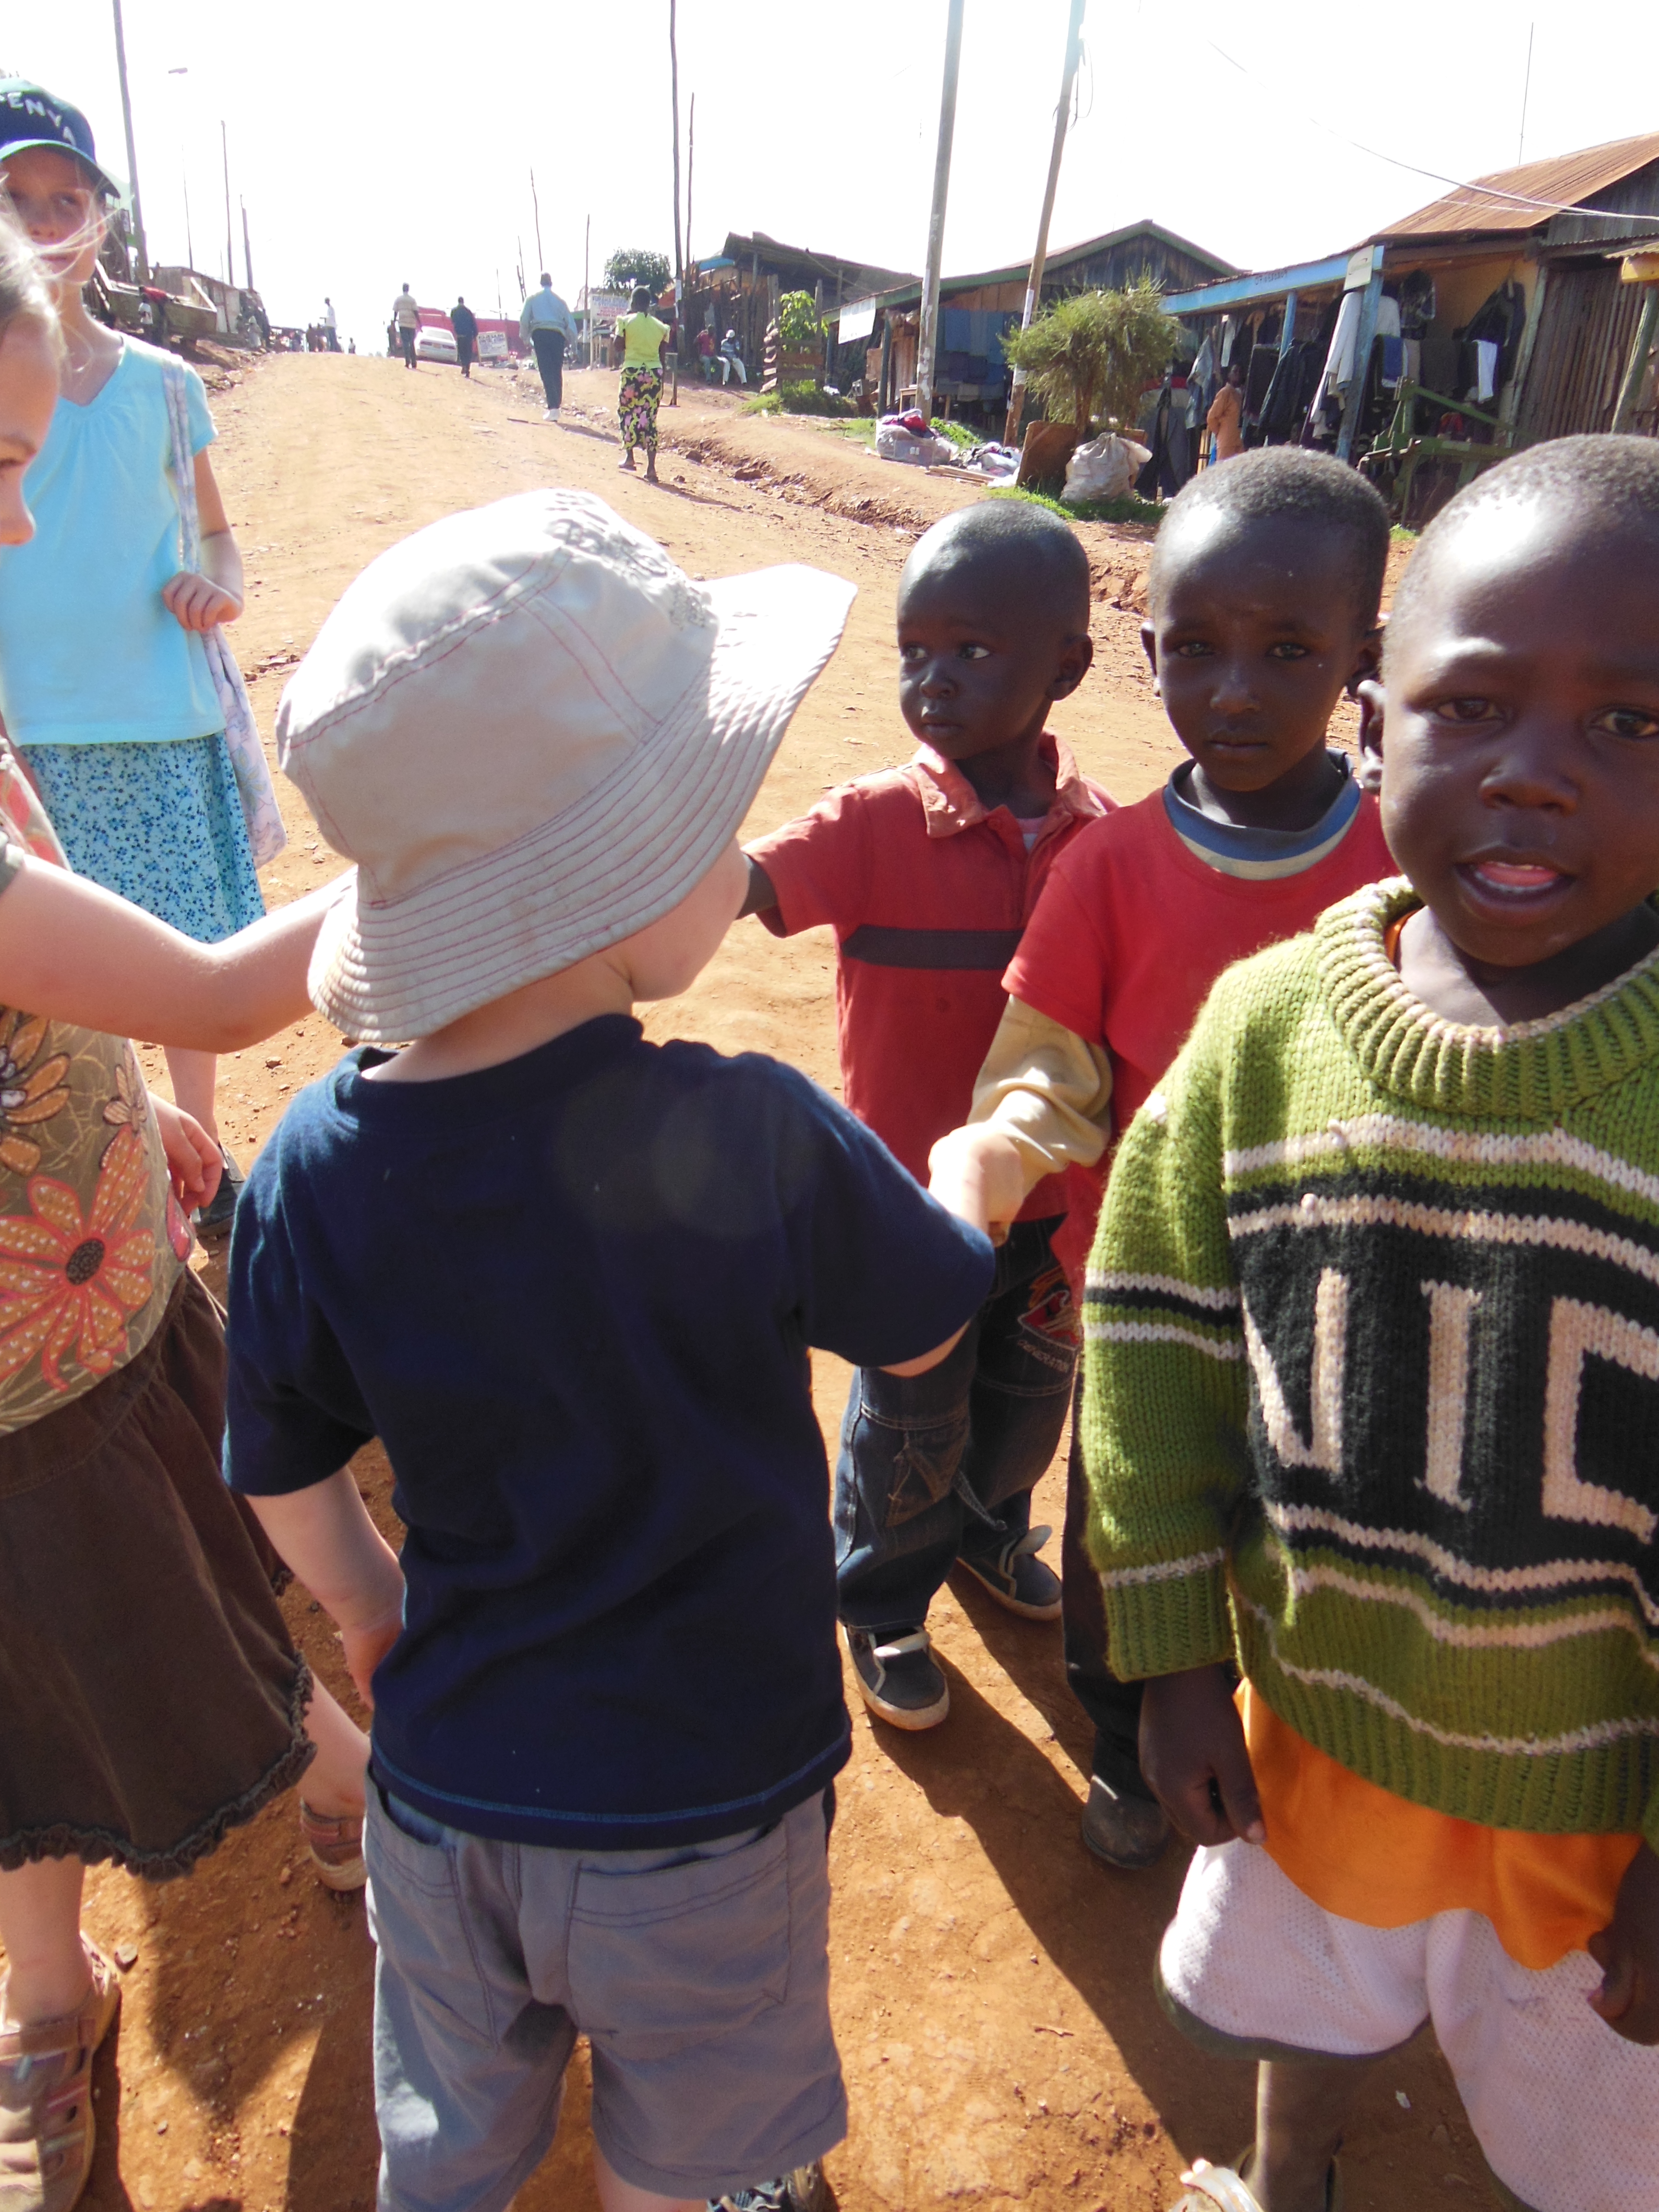 Our kids meeting Kenyan kids: homeschool while traveling